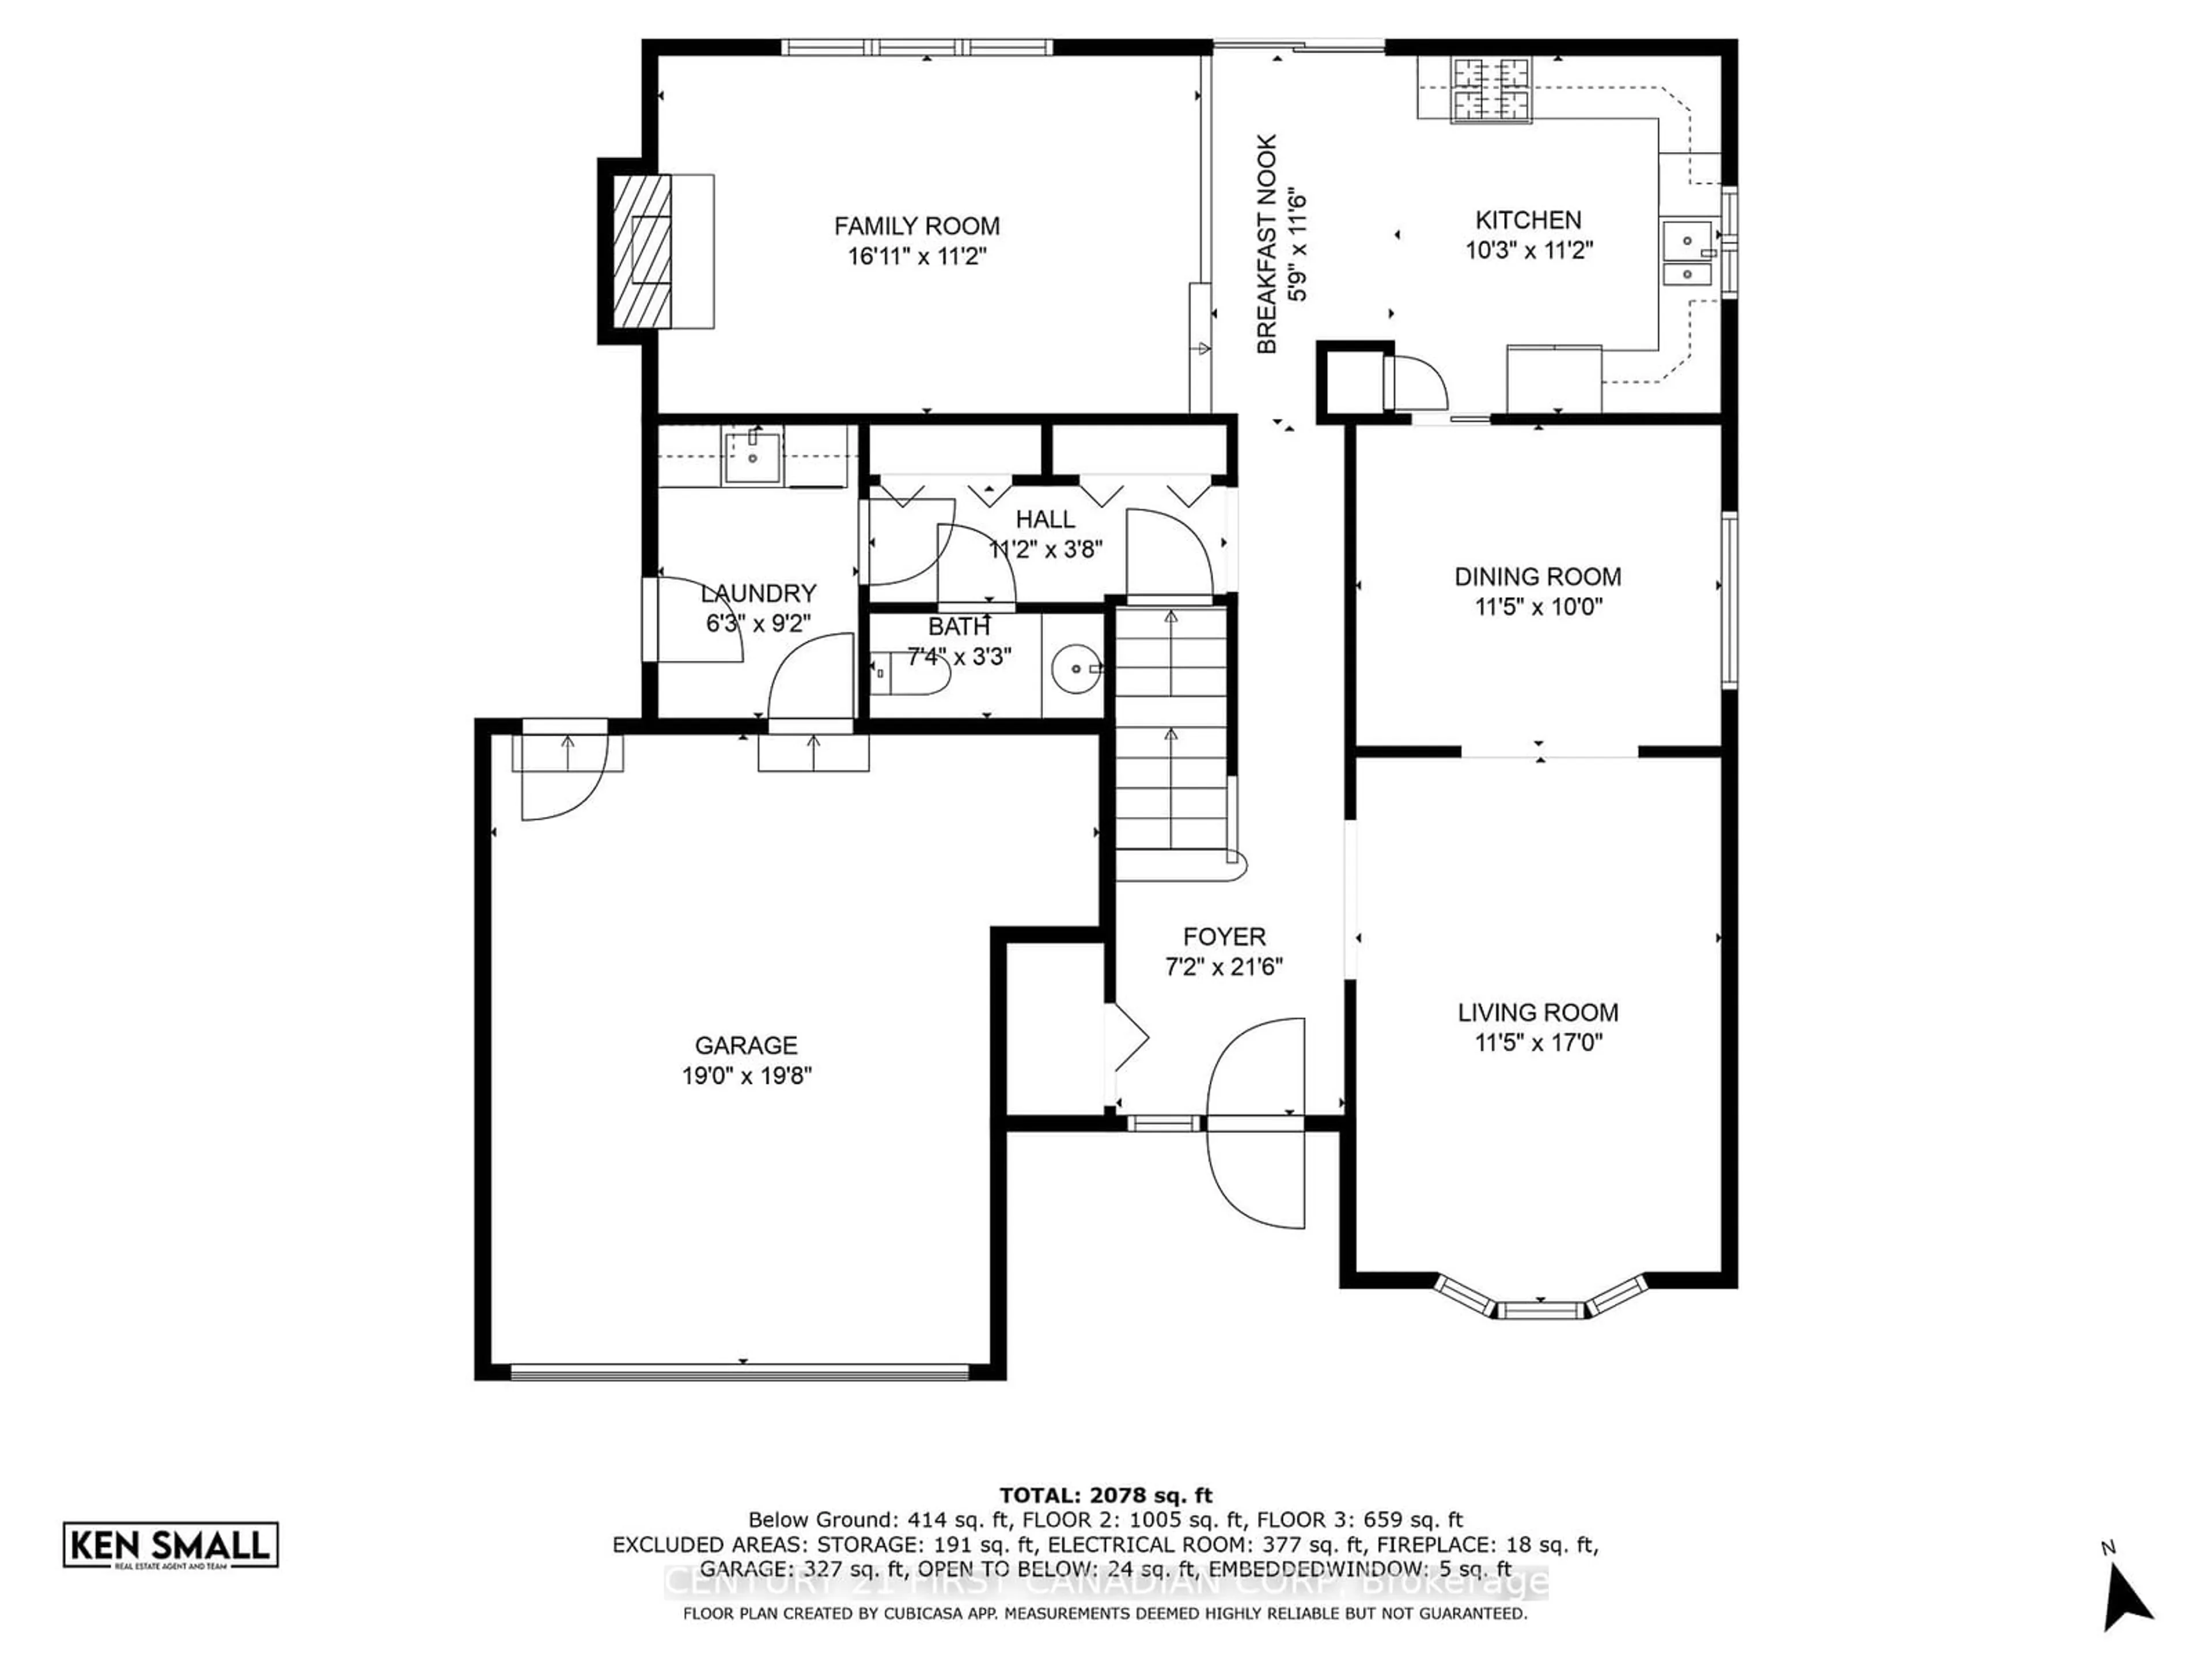 Floor plan for 151 Edmunds Pl, London Ontario N5Z 4V8